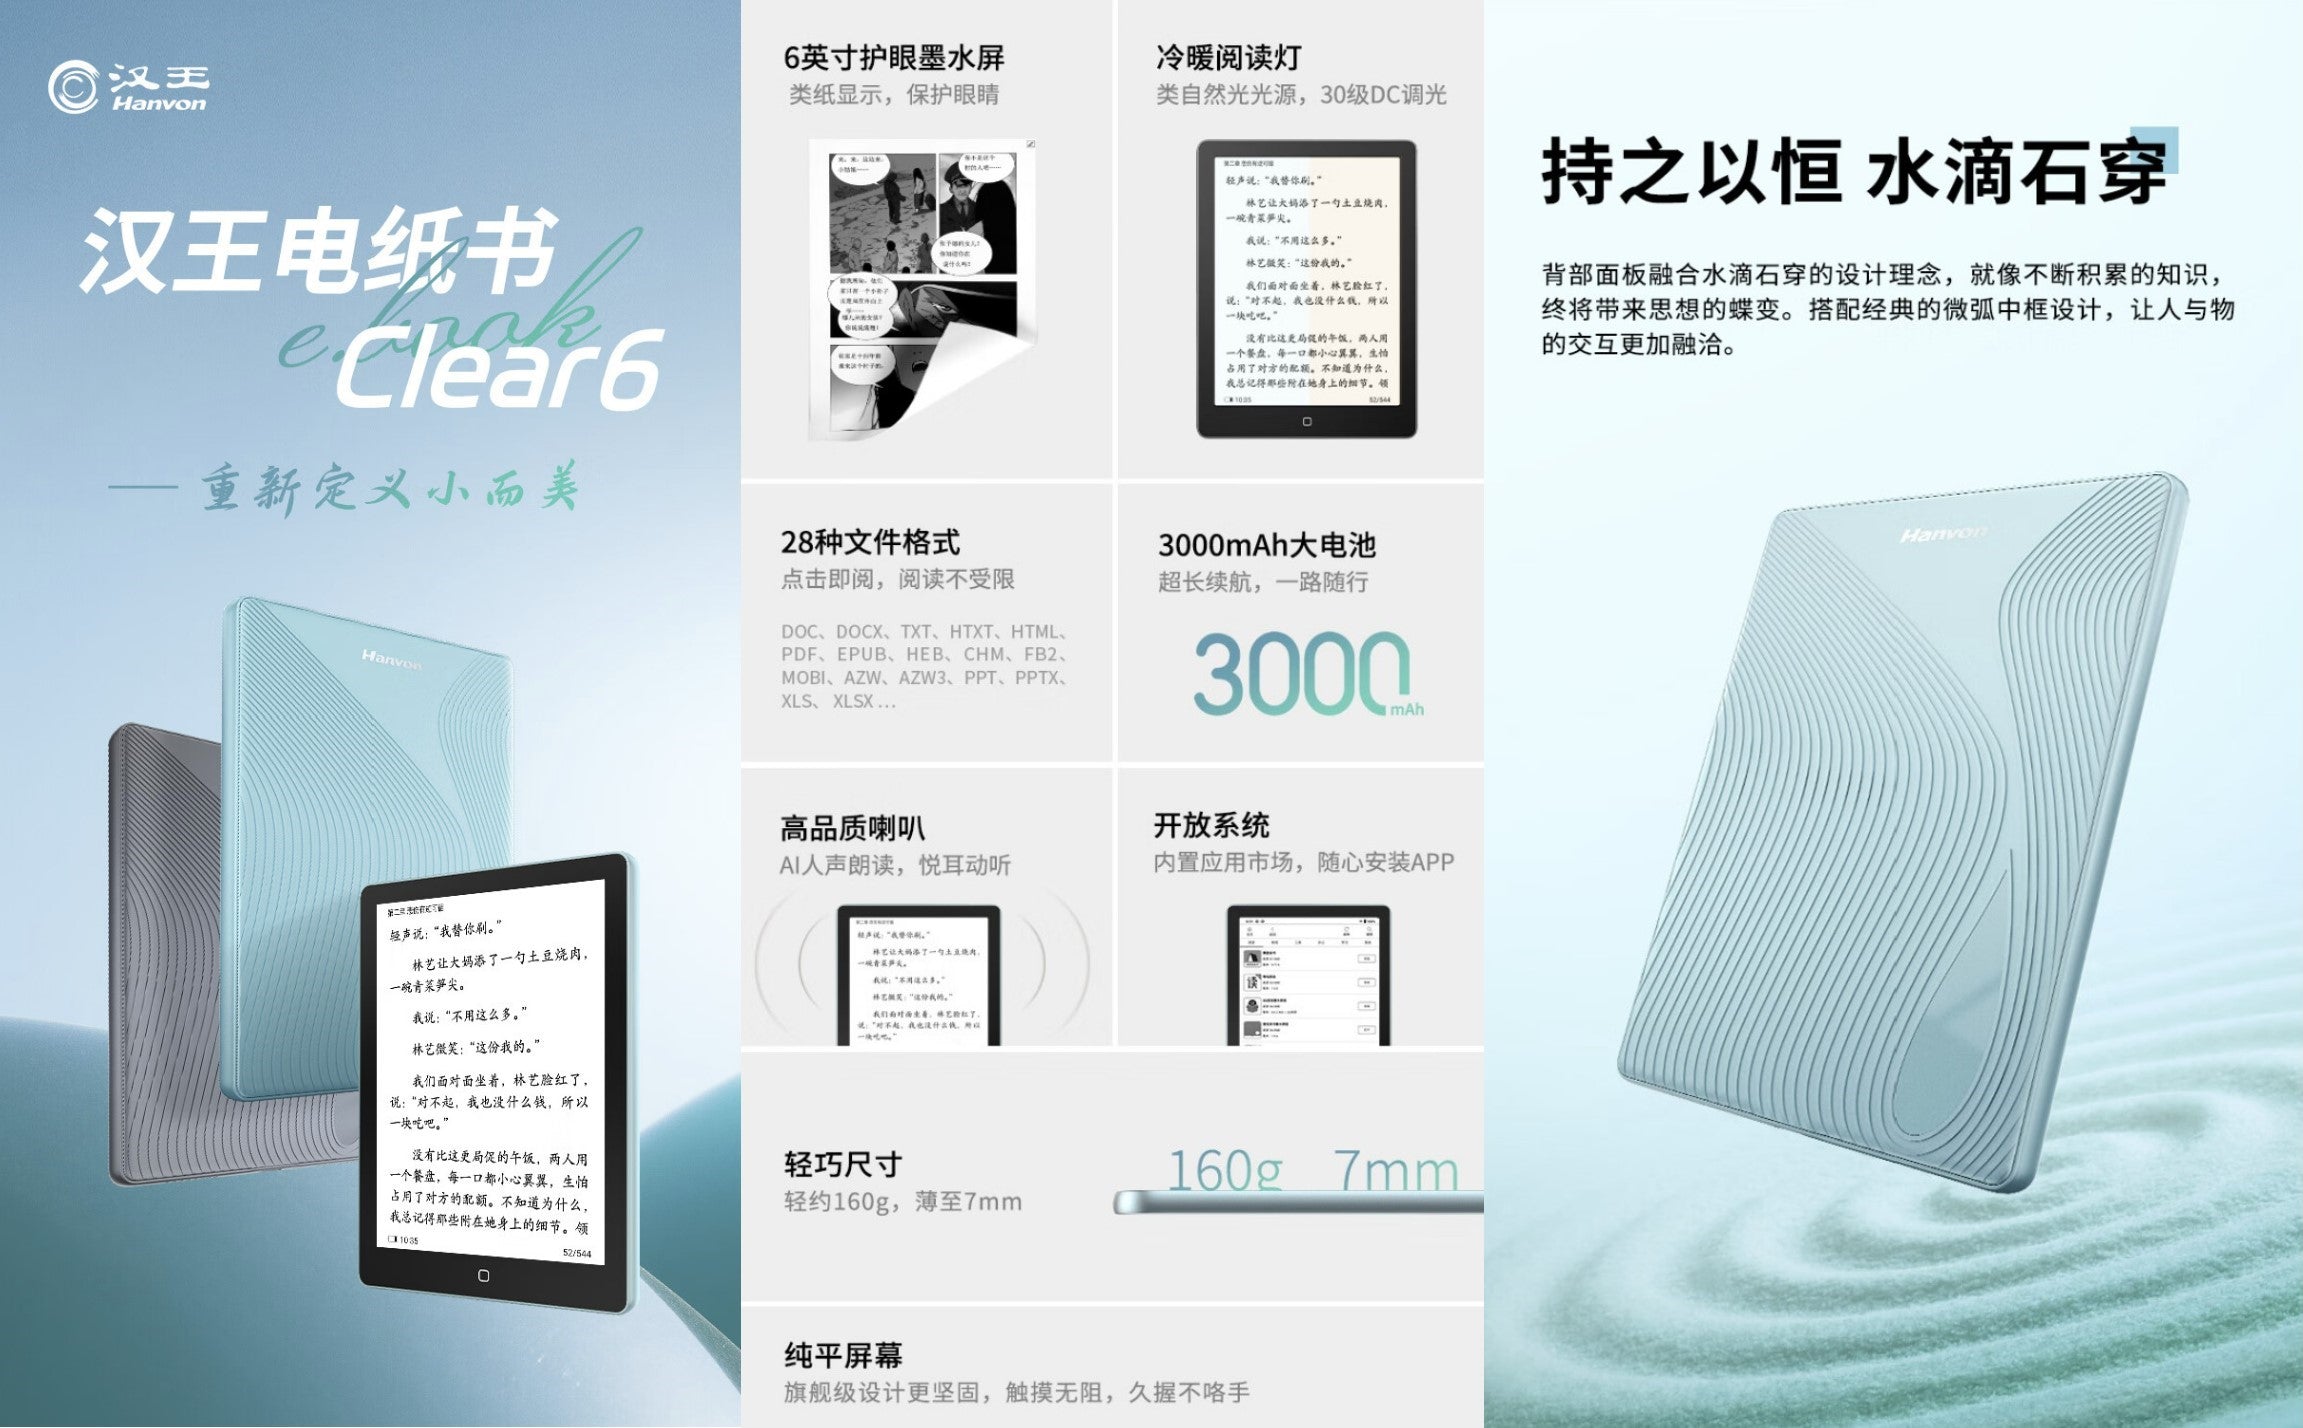 E-Ink新品：漢王推出最新6吋Clear6閱讀器，配備3000毫安電池